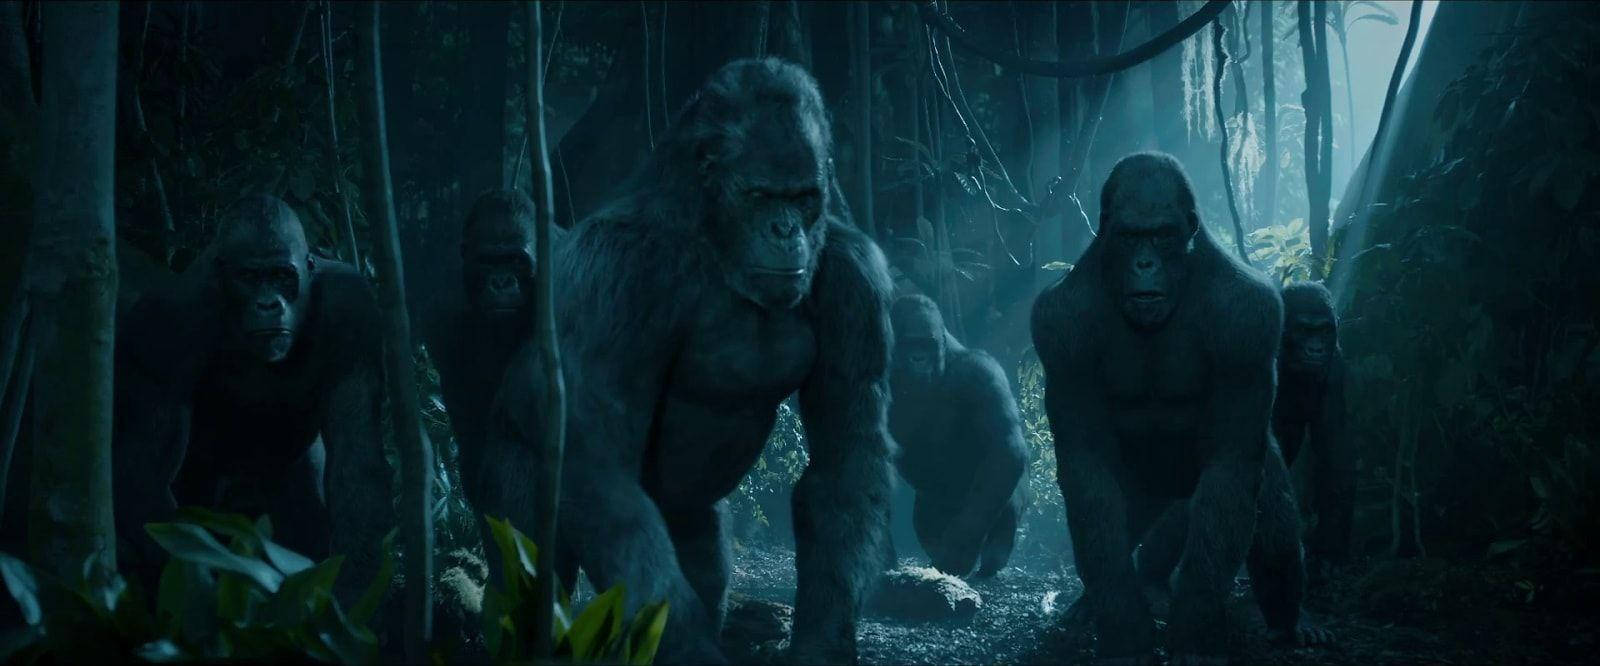 Legenderne om Tarzan Stor Gorilla Familie Scene Wallpaper